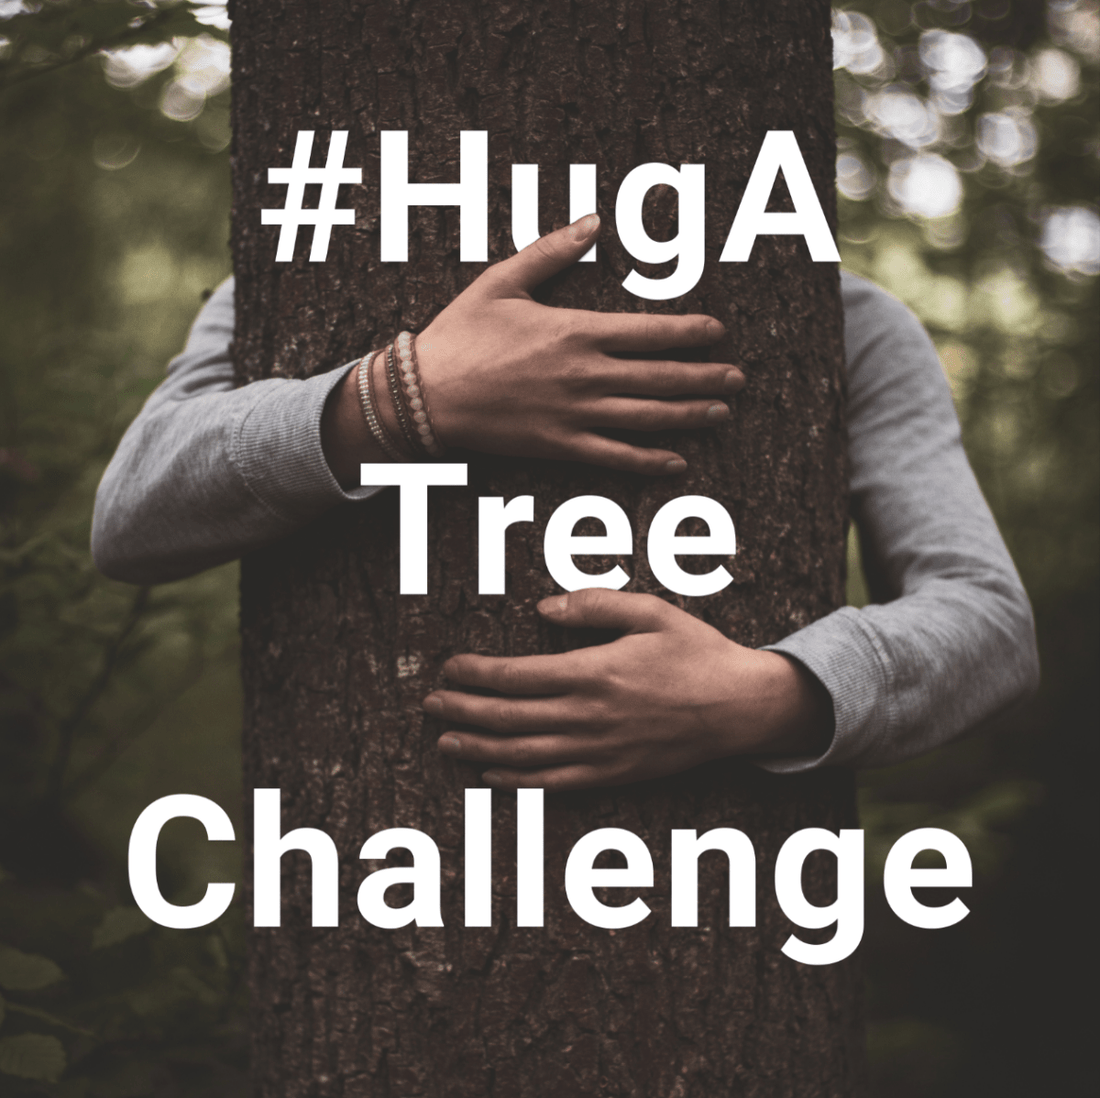 #HugATreeChallenge - Help plant 100,000 trees! - NIKIN CH